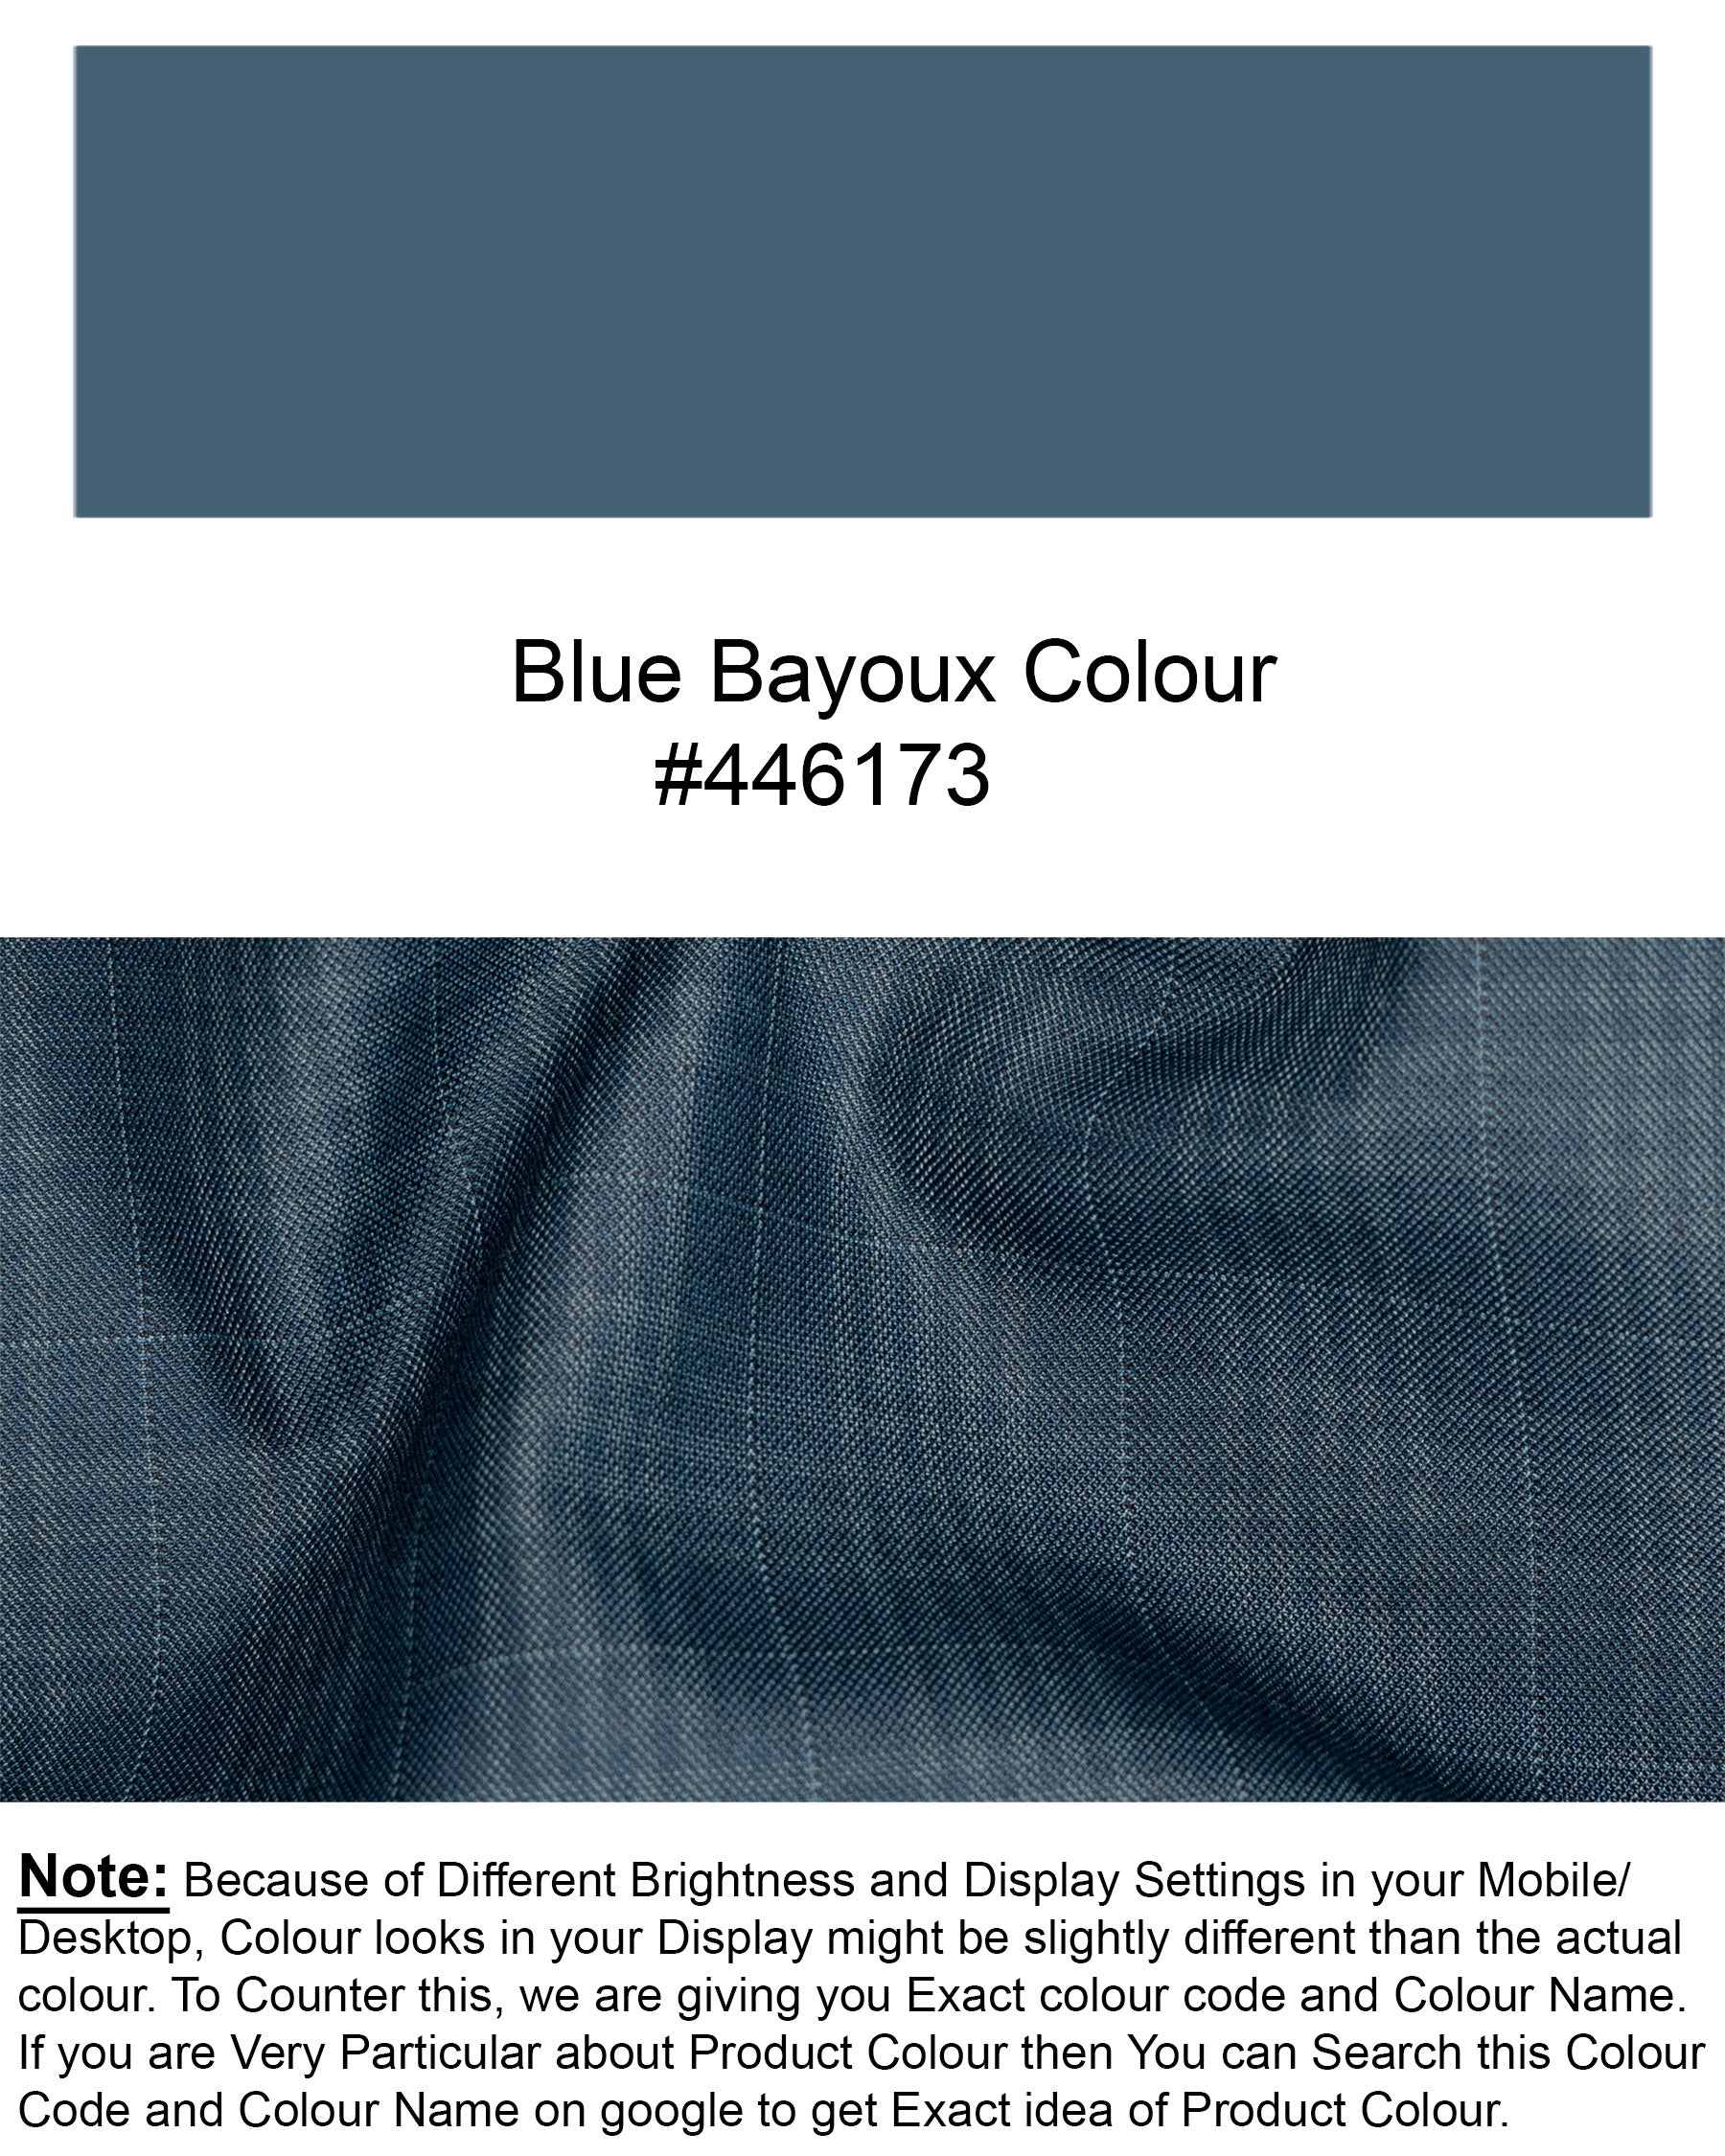 Blue Bayoux Checkered Wool Rich Blazer BL1588-SB-36, BL1588-SB-38, BL1588-SB-40, BL1588-SB-42, BL1588-SB-44, BL1588-SB-46, BL1588-SB-48, BL1588-SB-50, BL1588-SB-52, BL1588-SB-54, BL1588-SB-56, BL1588-SB-58, BL1588-SB-60